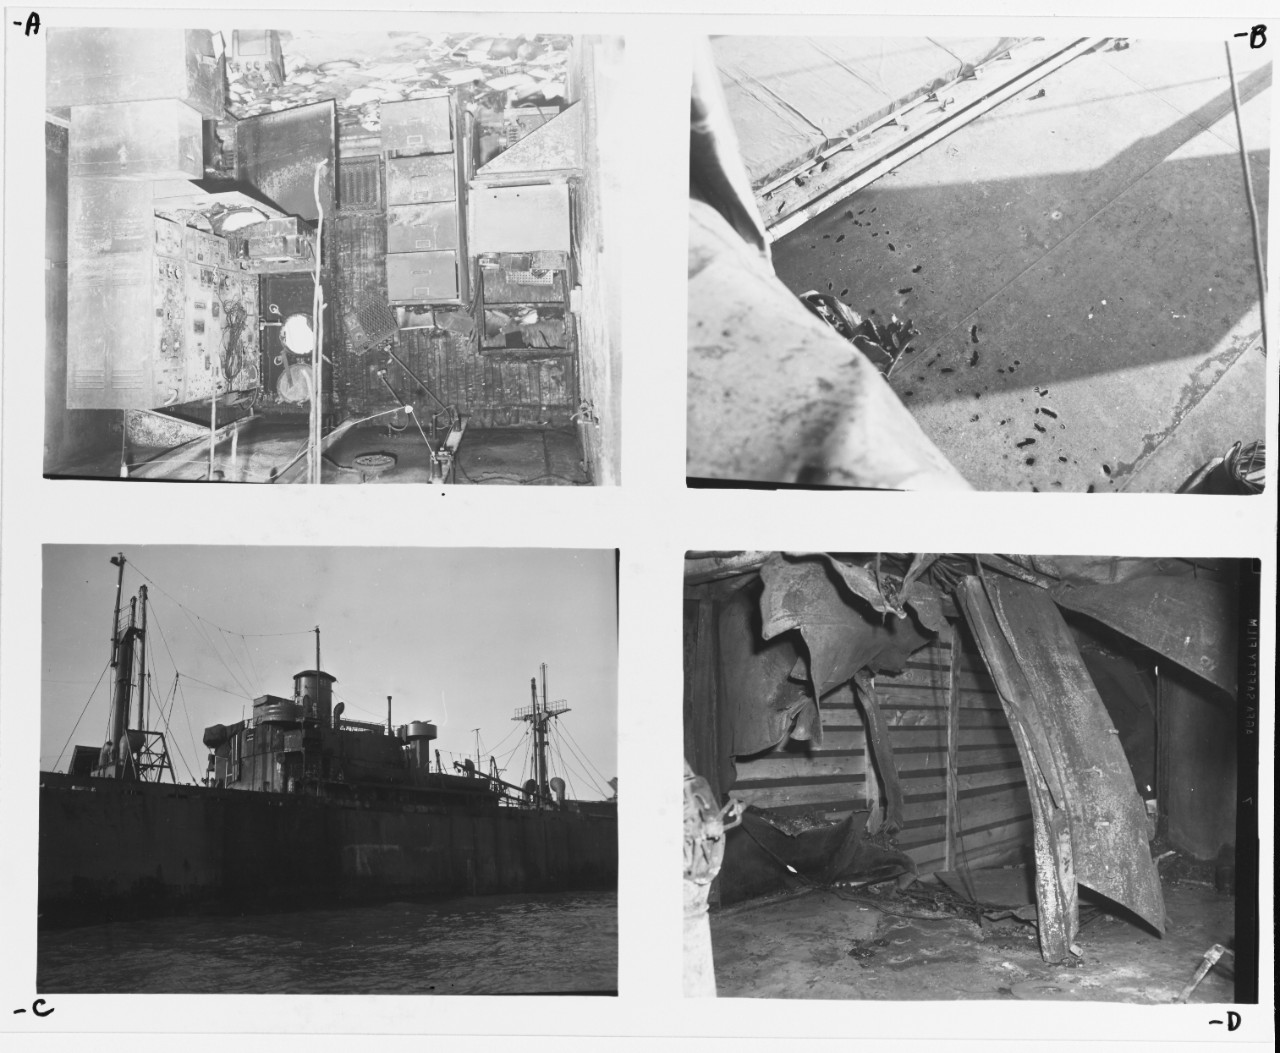 S.S. JEREMIAH M. DAILY (U.S. Merchant Cargo Ship, 1943-1962)